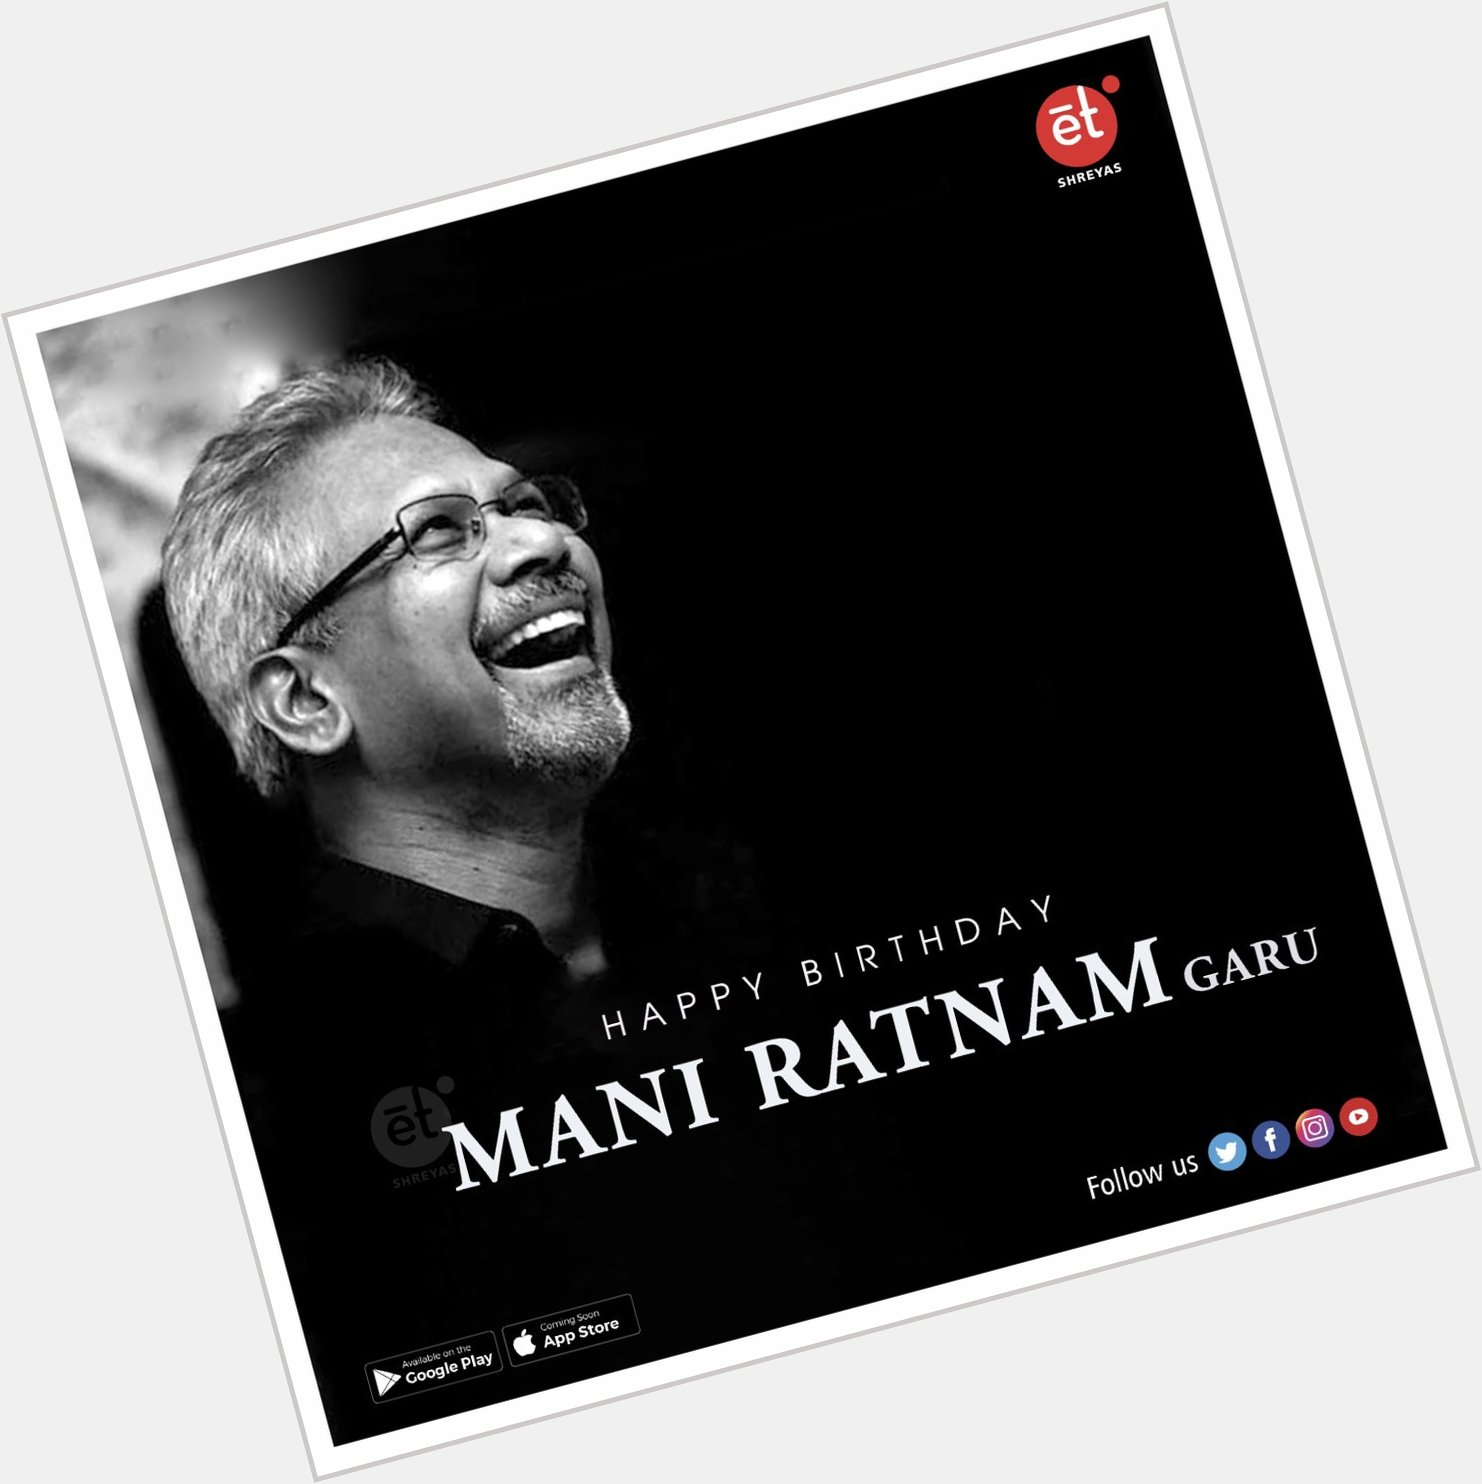 Happy Birthday to the legendary music director Ilayaraja garu & director Mani Ratnam garu  